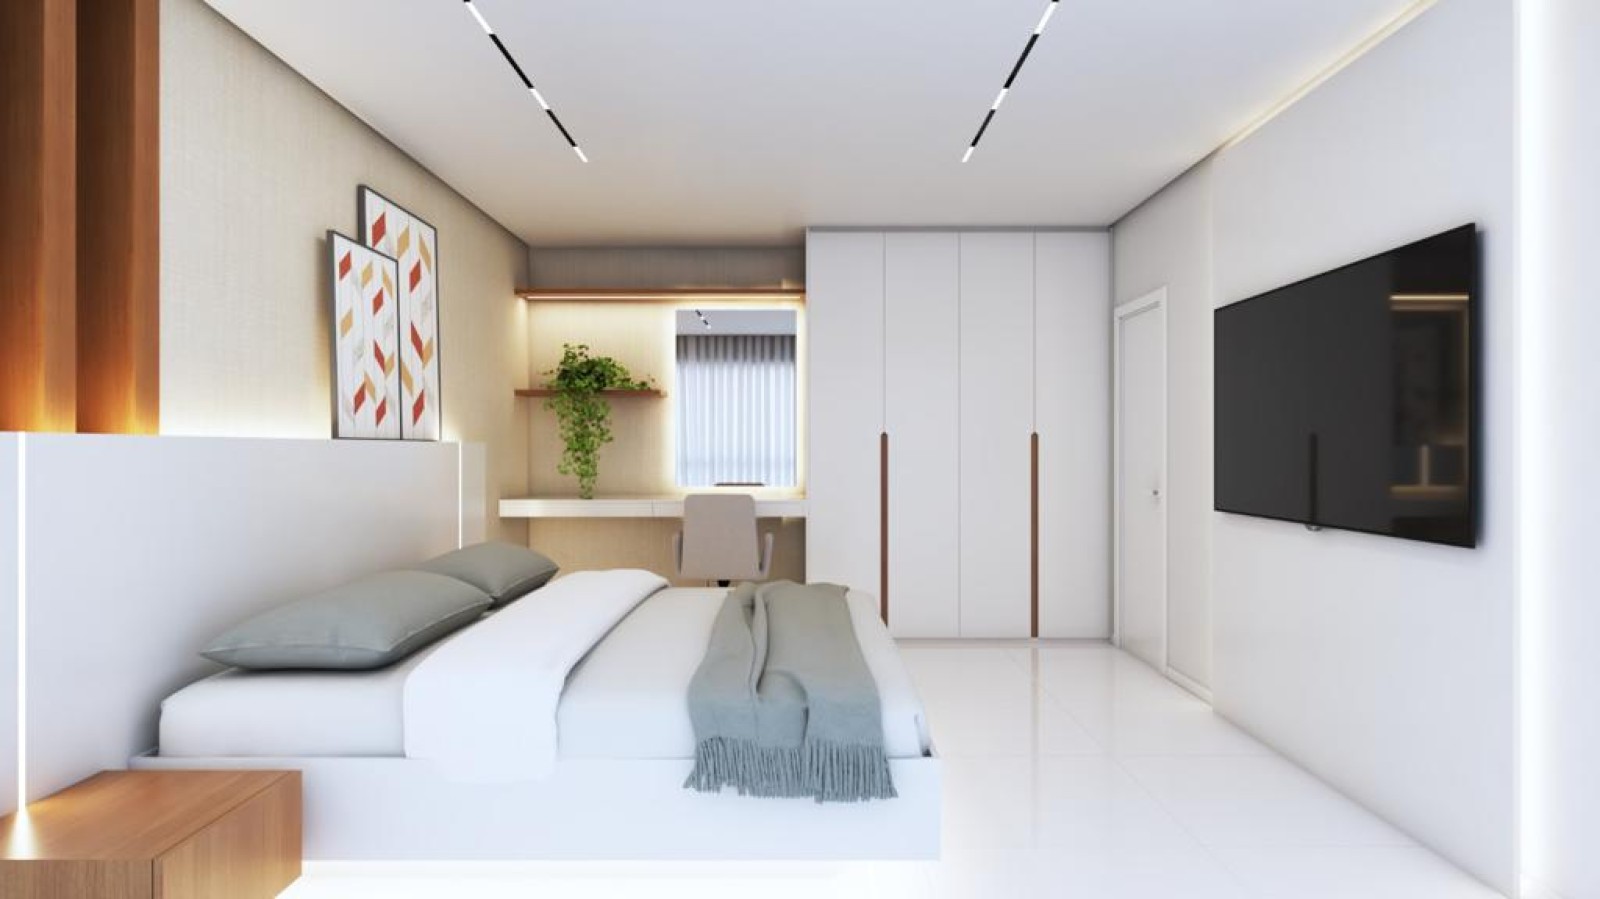 3 Bedroom Luxury House, for sale, in Portimão, Algarve_224668